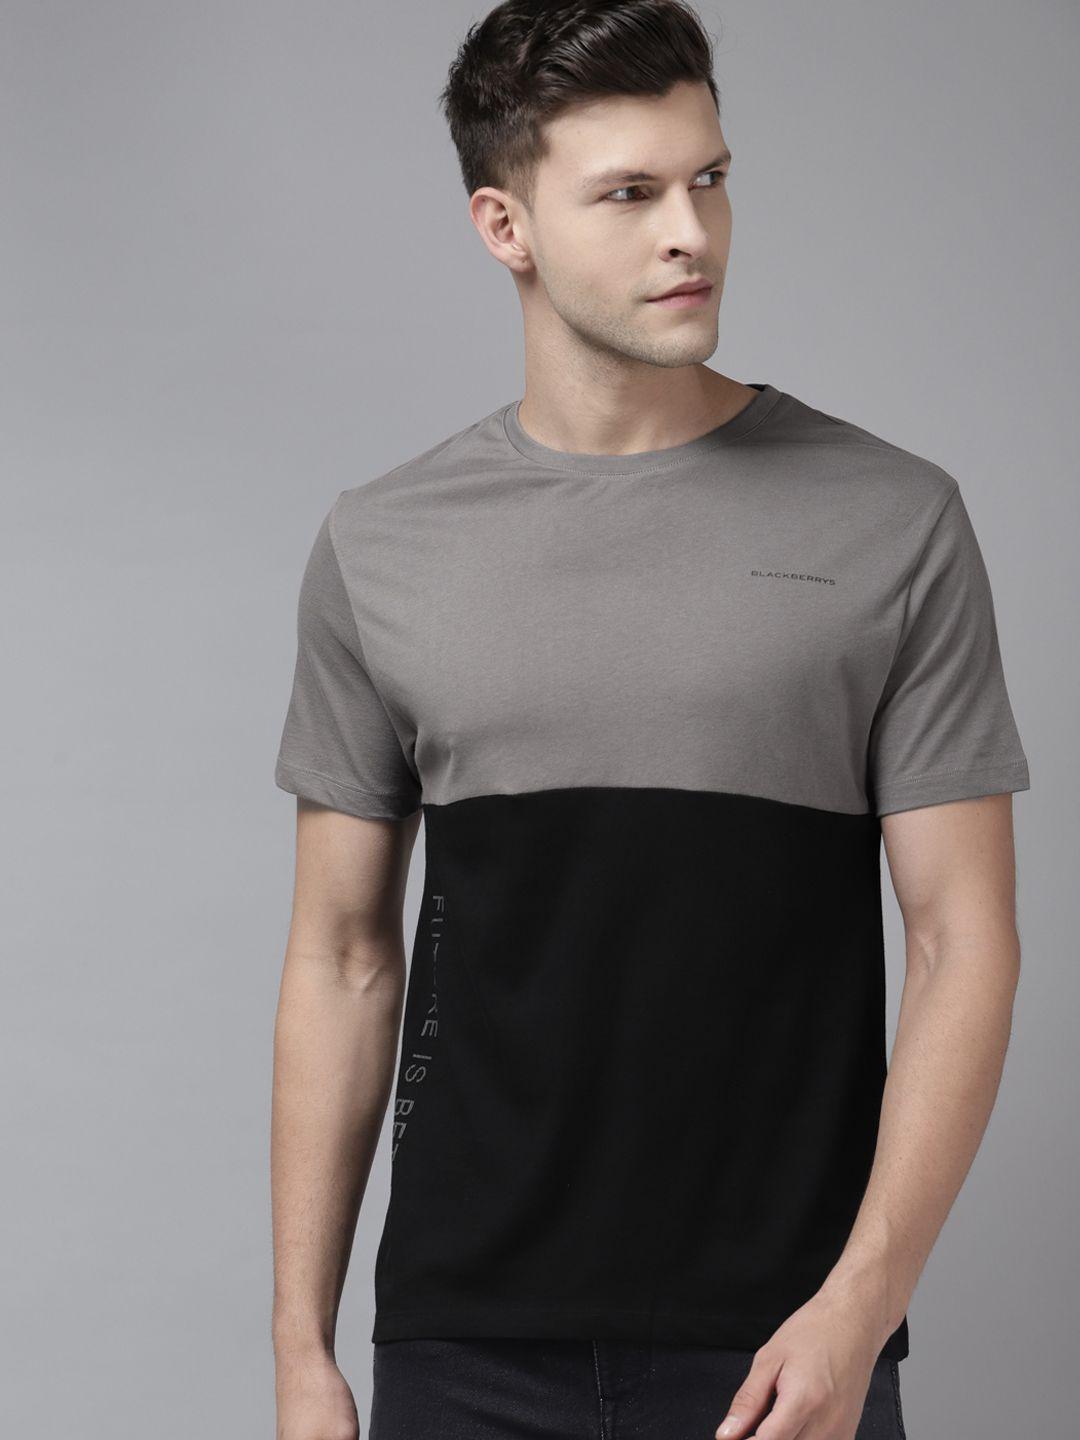 blackberrys men grey & black colourblocked pure cotton slim fit t-shirt